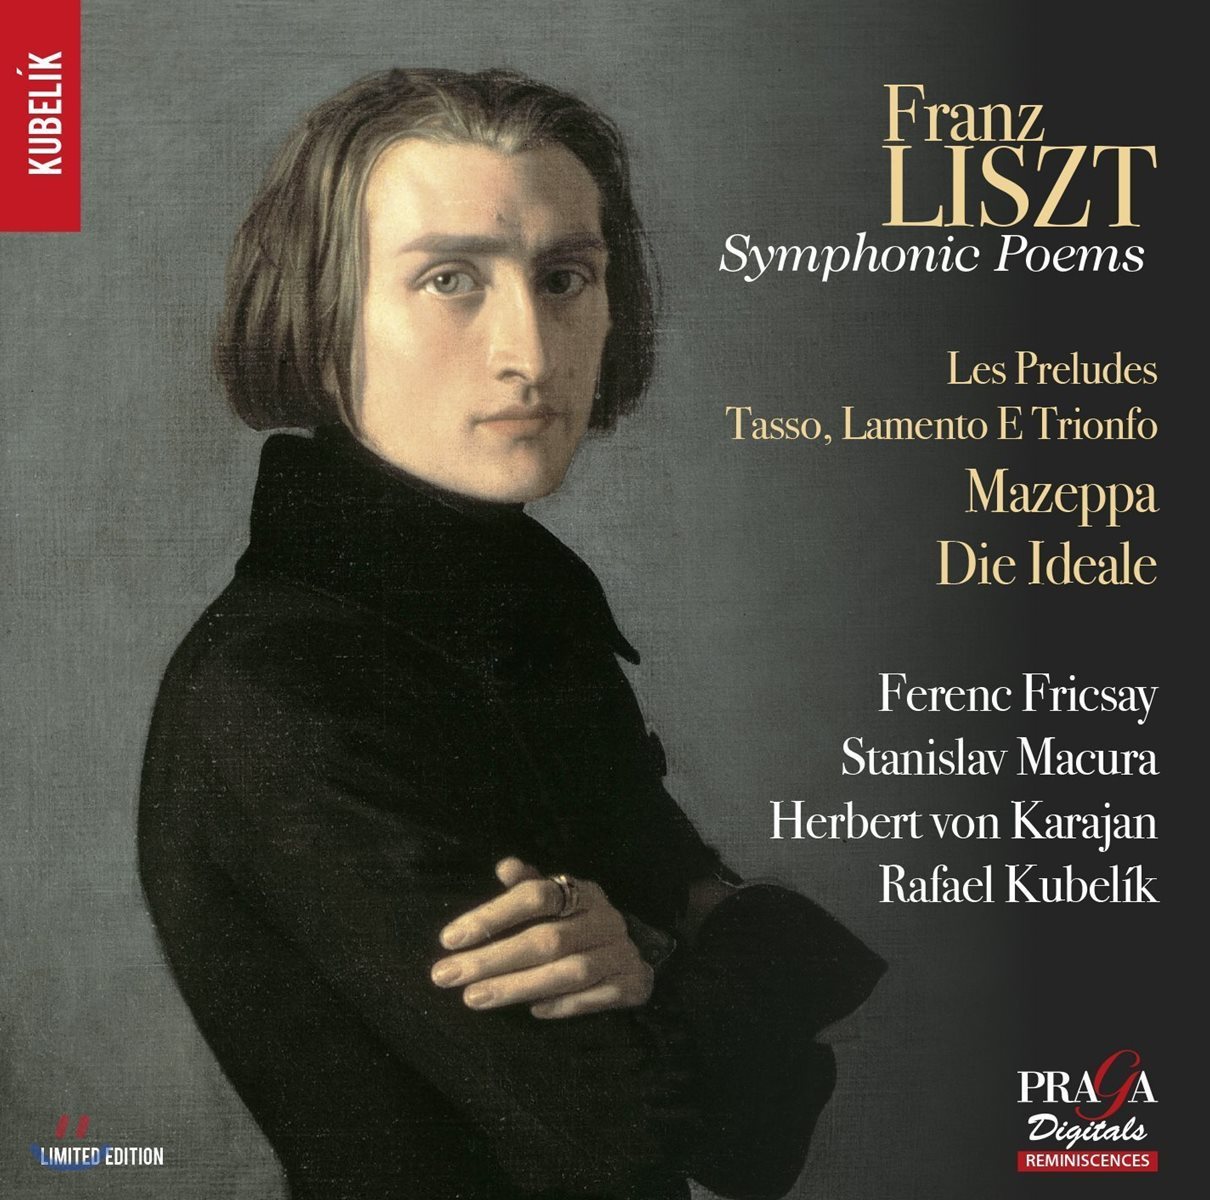 Rafael Kubelik / Ferenc Fricsay 리스트: 교향시 1집 - 전주곡, 타소 비탄과 승리, 마제파, 이상 (Liszt: Symphonic Poems)